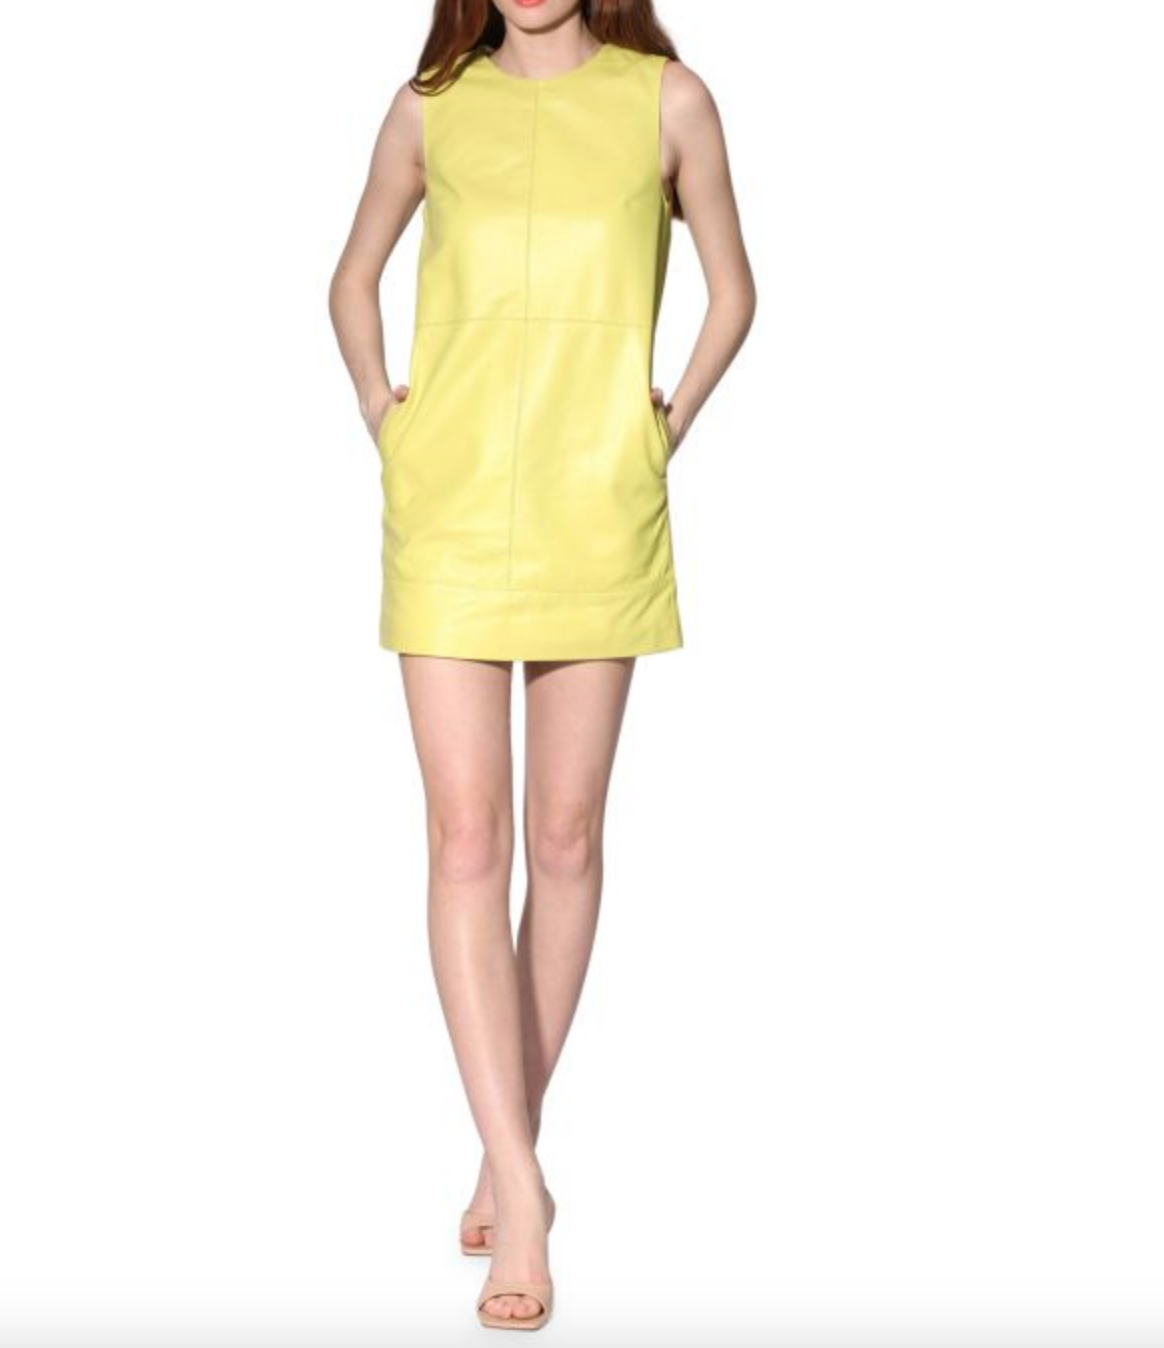 Paige DeSorbo's Neon Mini Dress